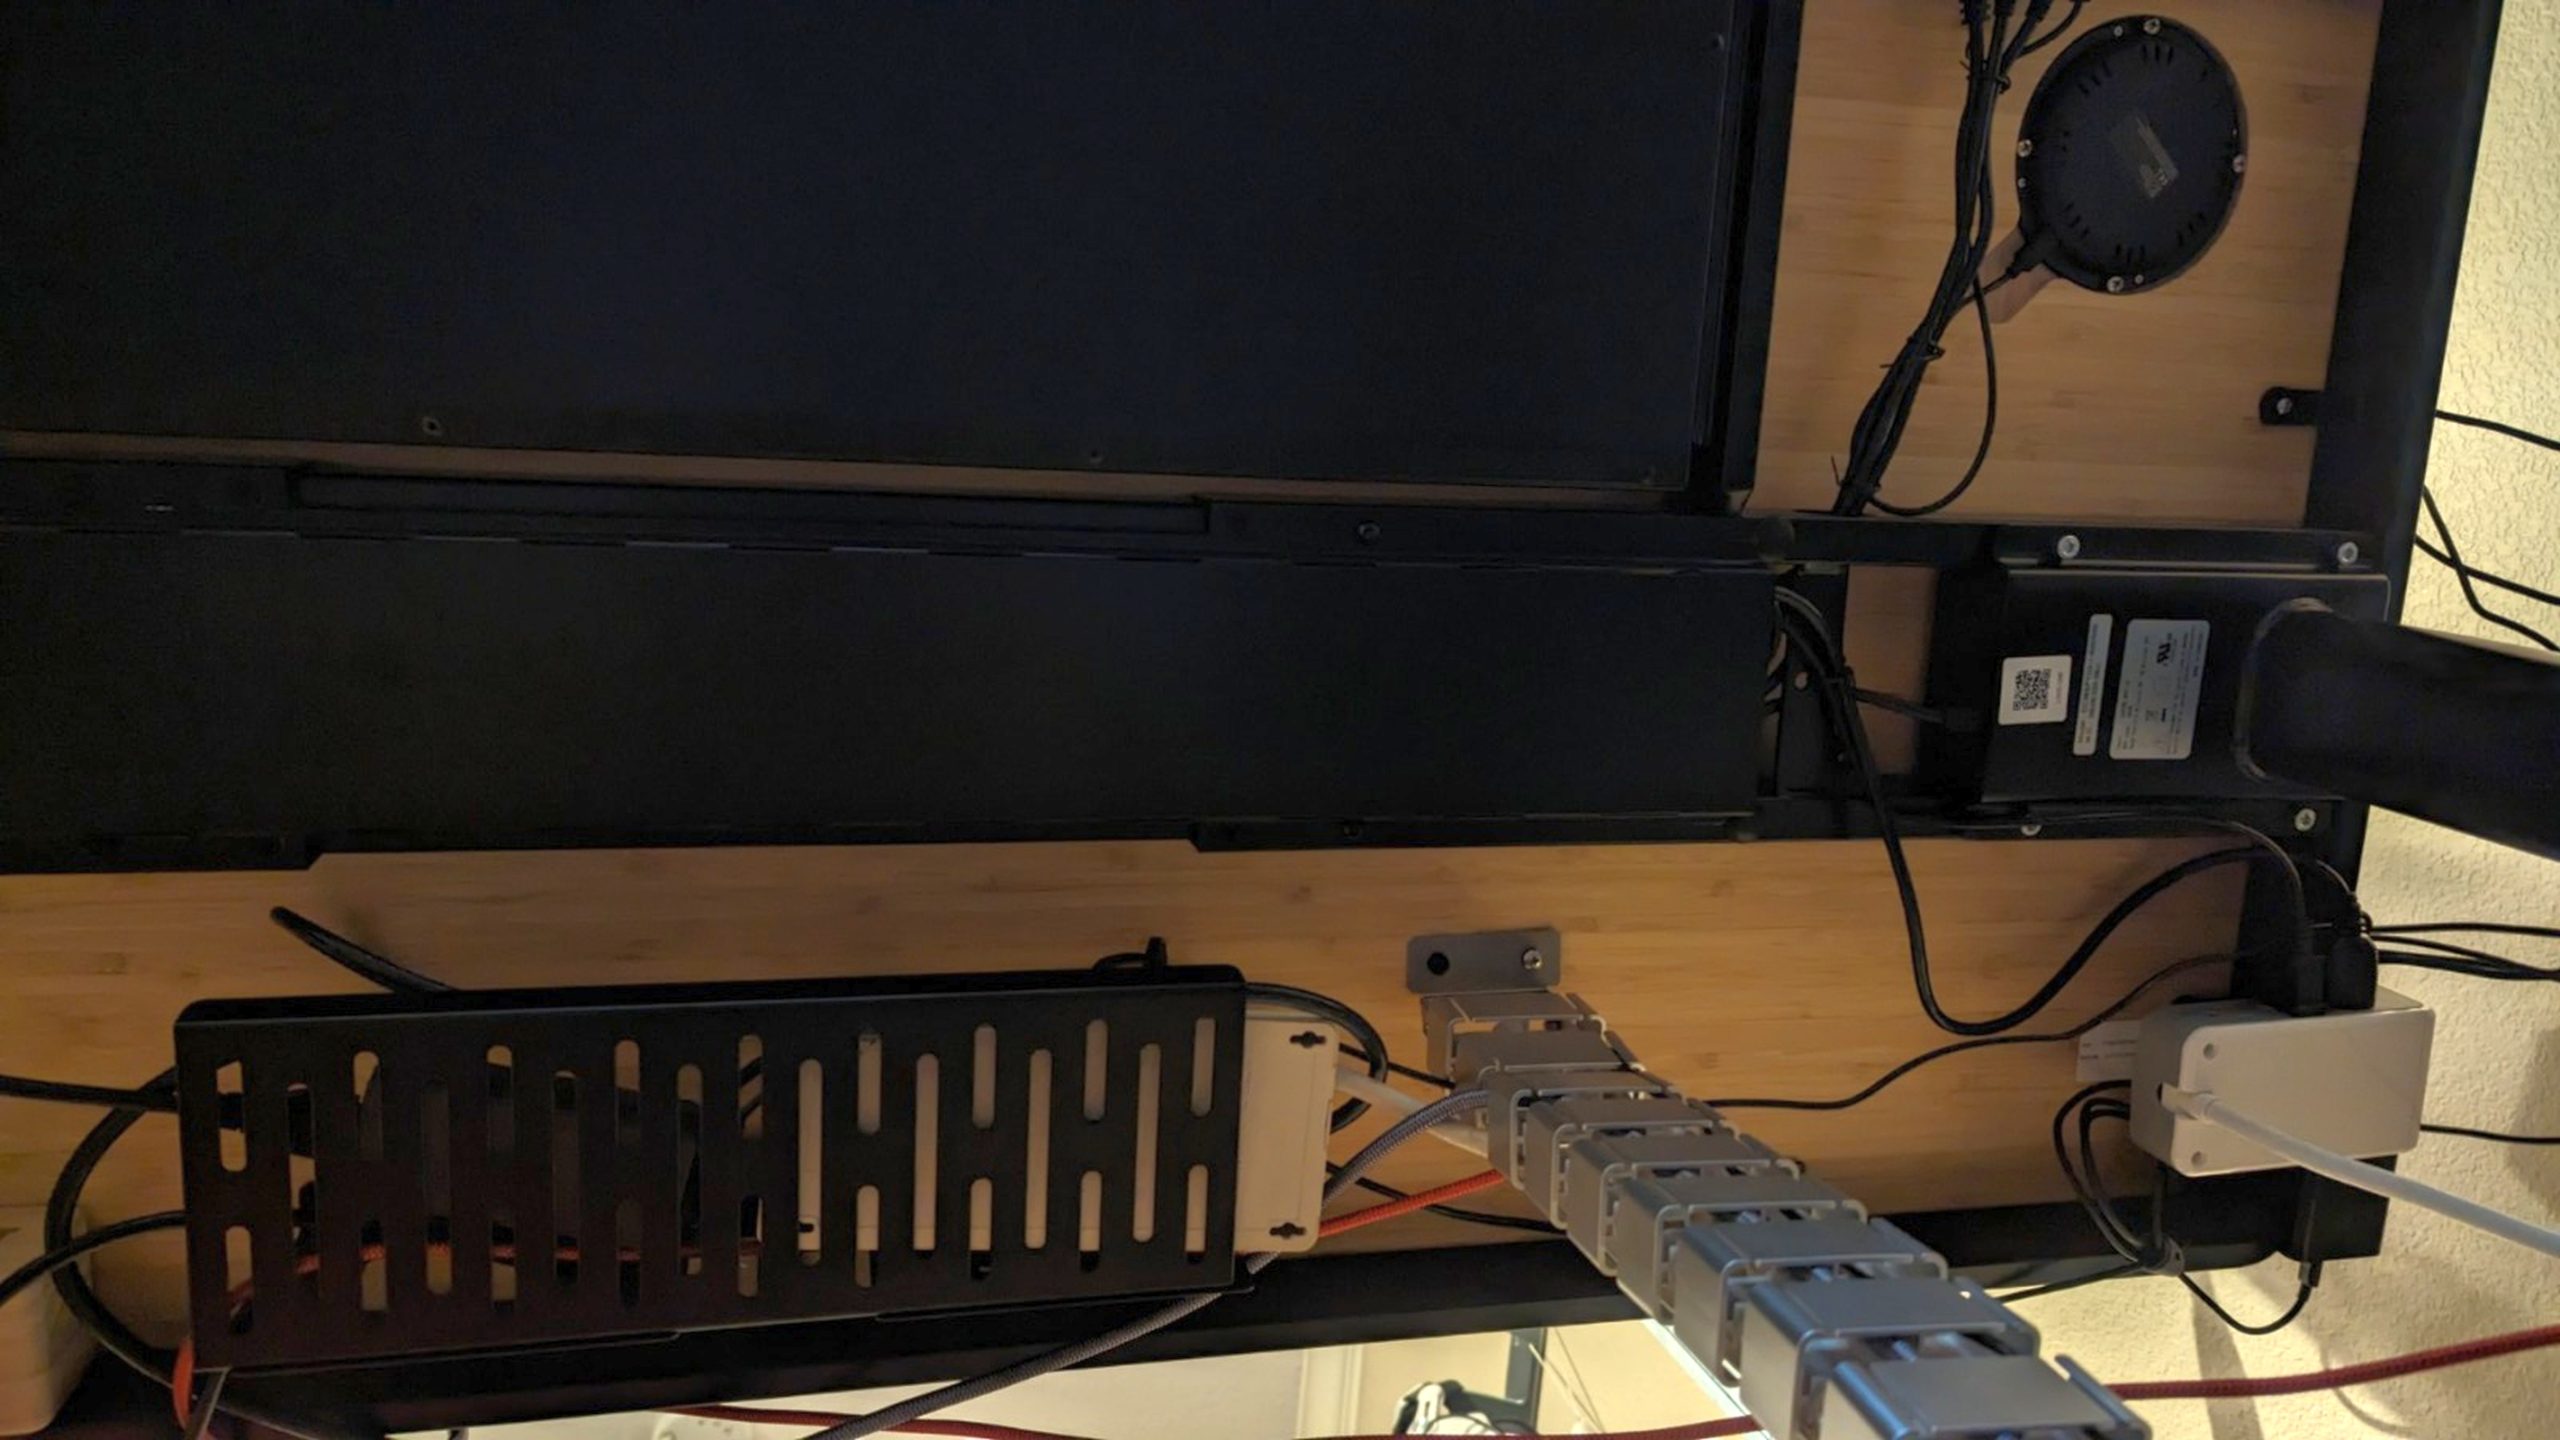 Flexispot Q8 Comhar Pro: Upgrading my  studio setup